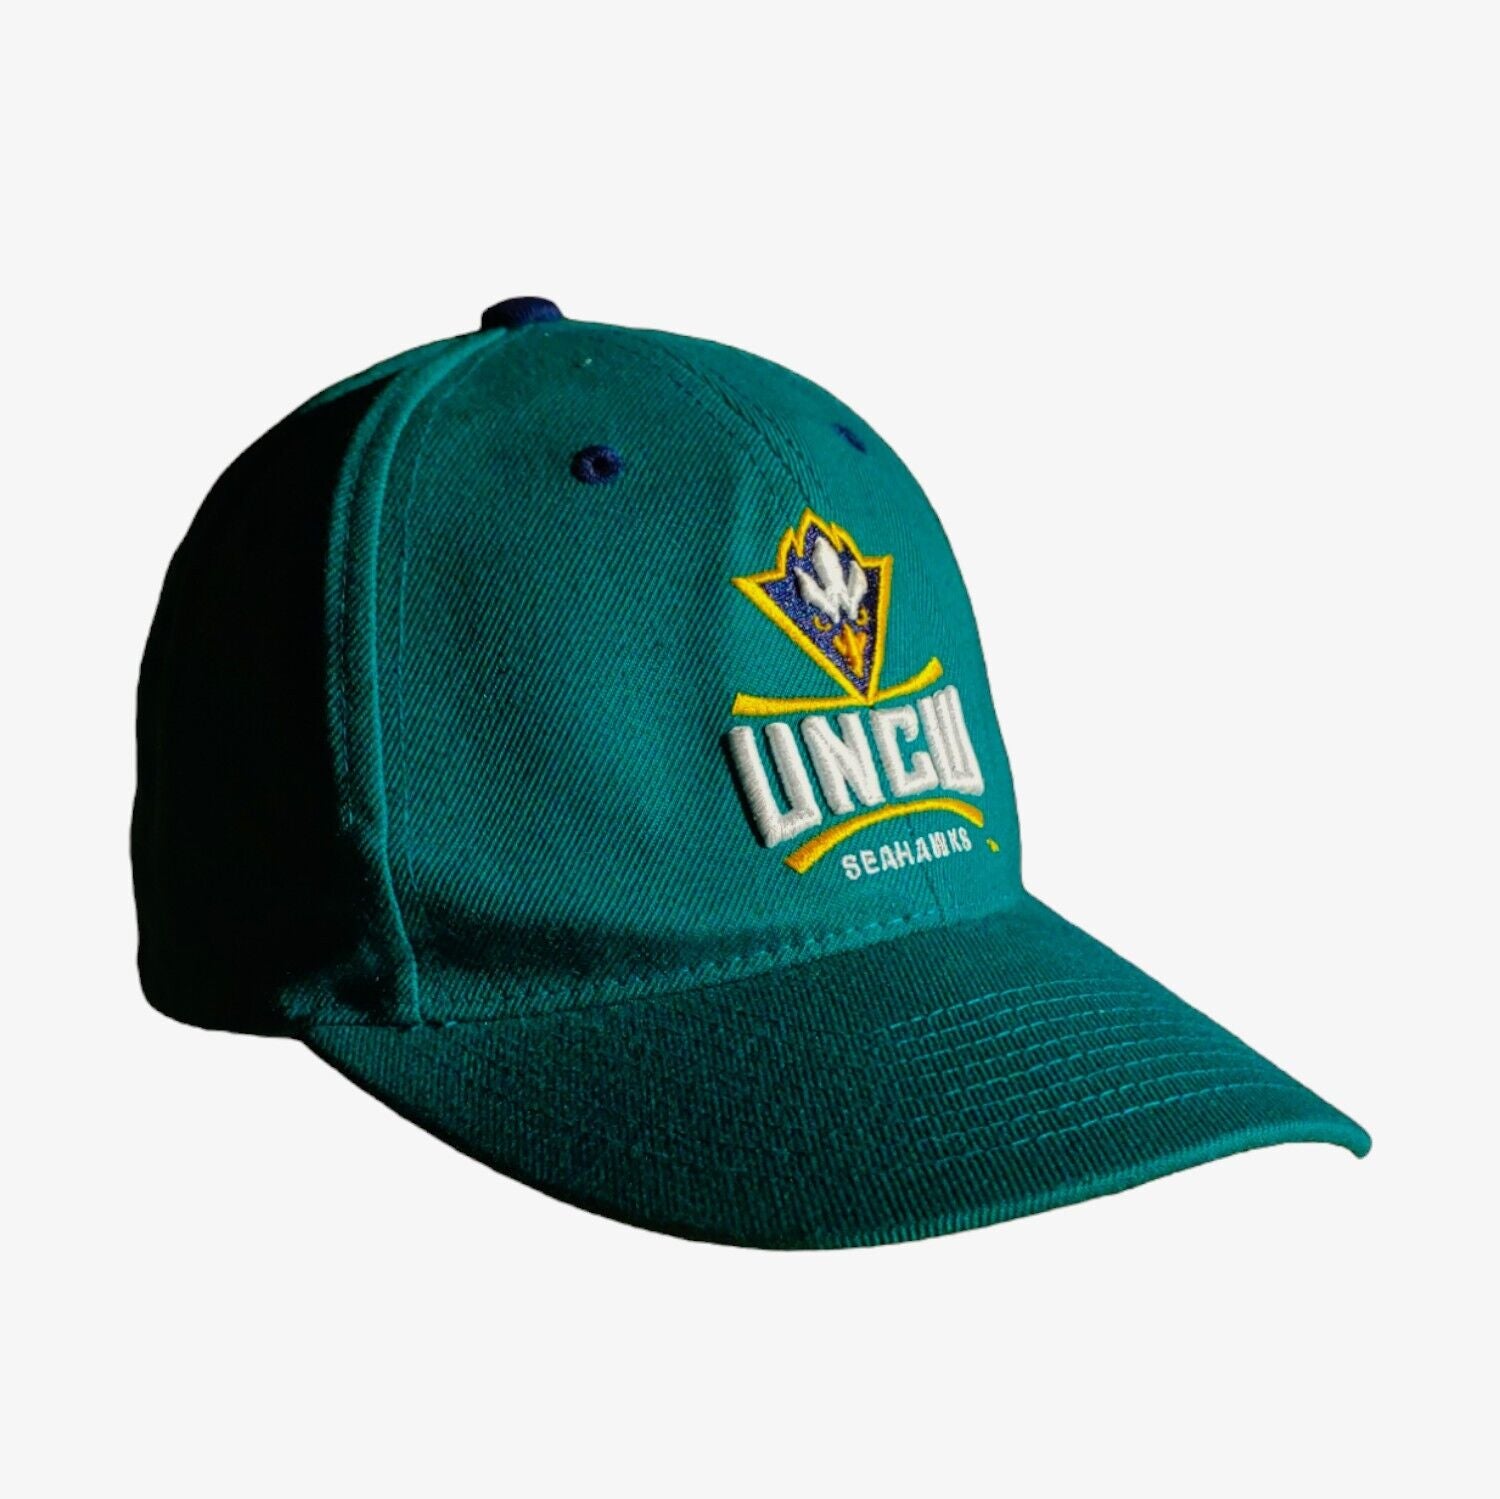 Seahawks vintage cap